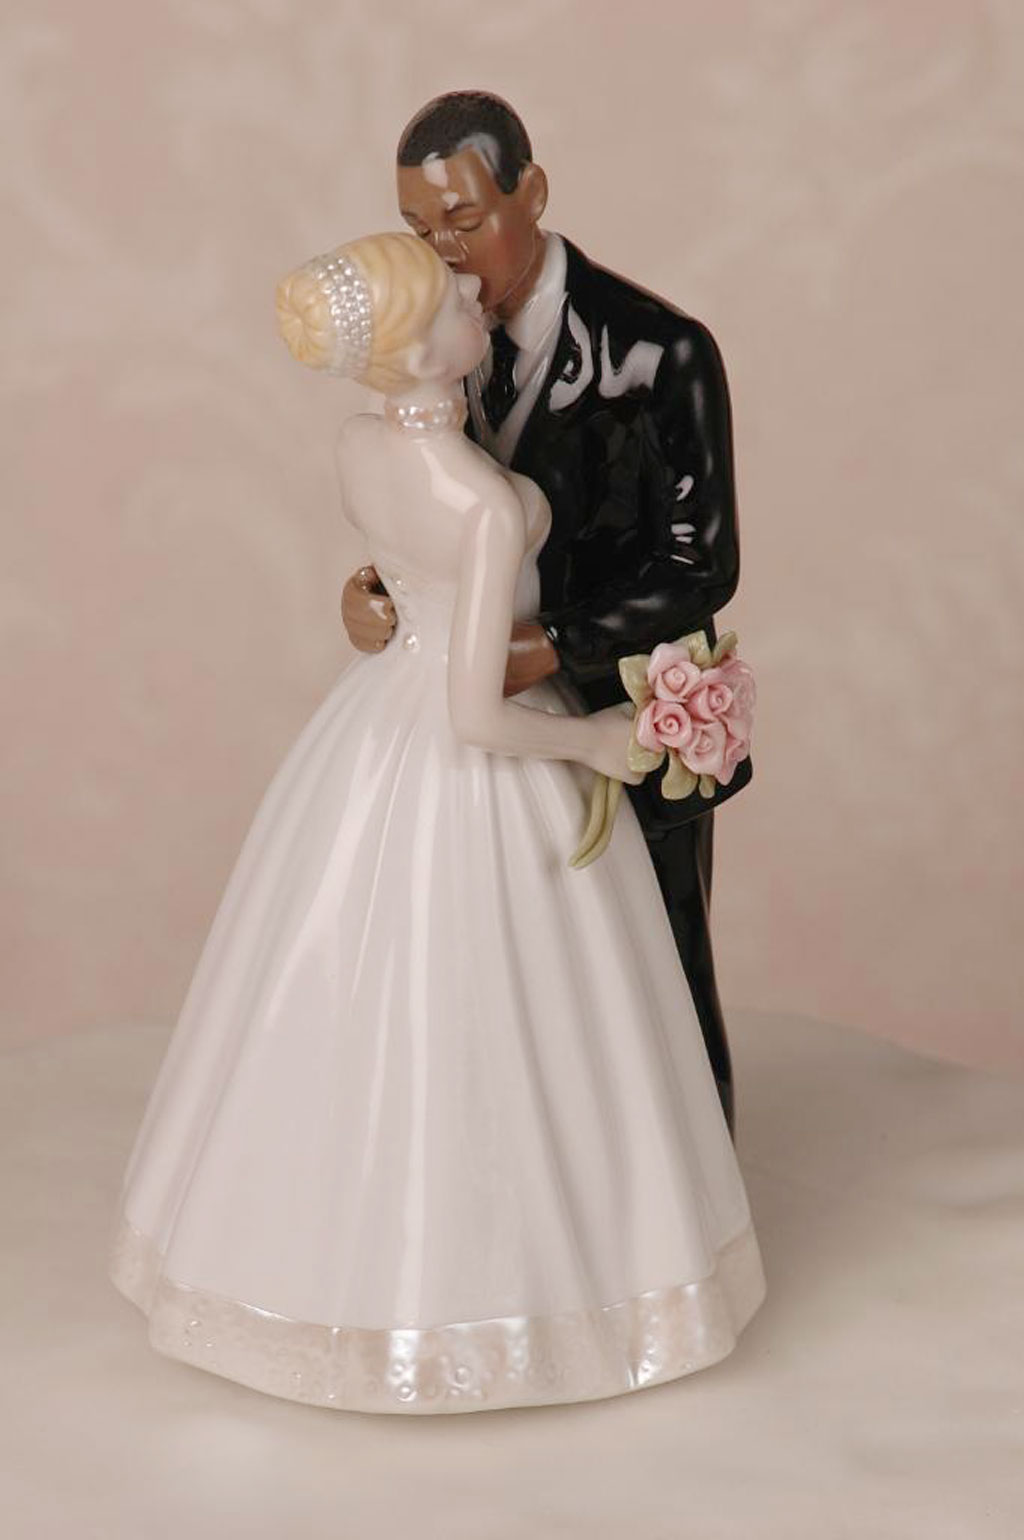 Interracial Couple Wedding Cake Topper : Cake Ideas by Prayface.net